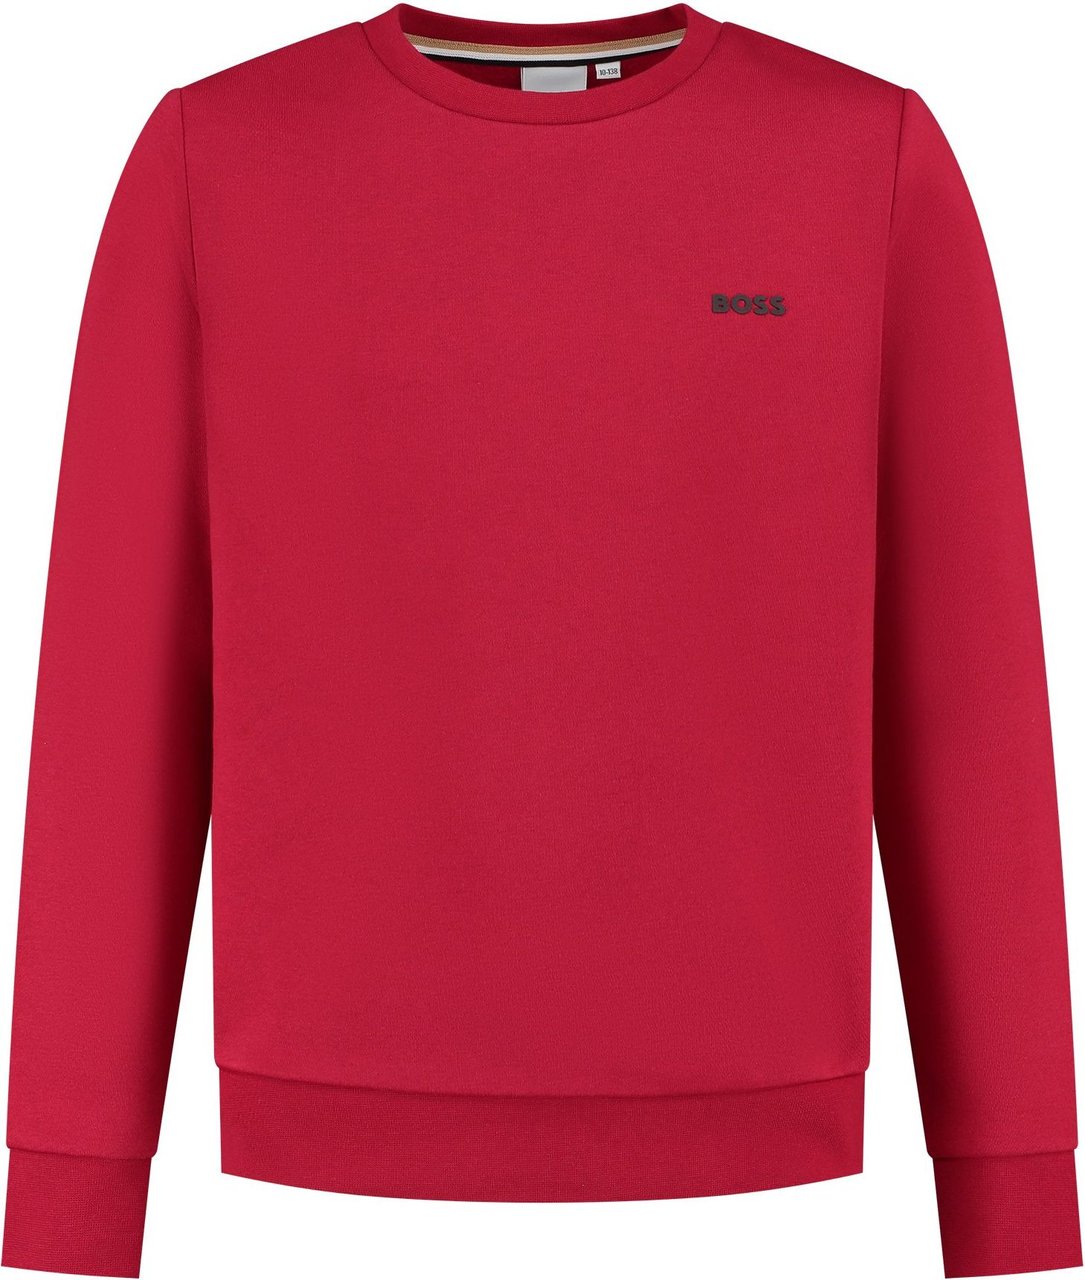 Hugo Boss Sweater Rood